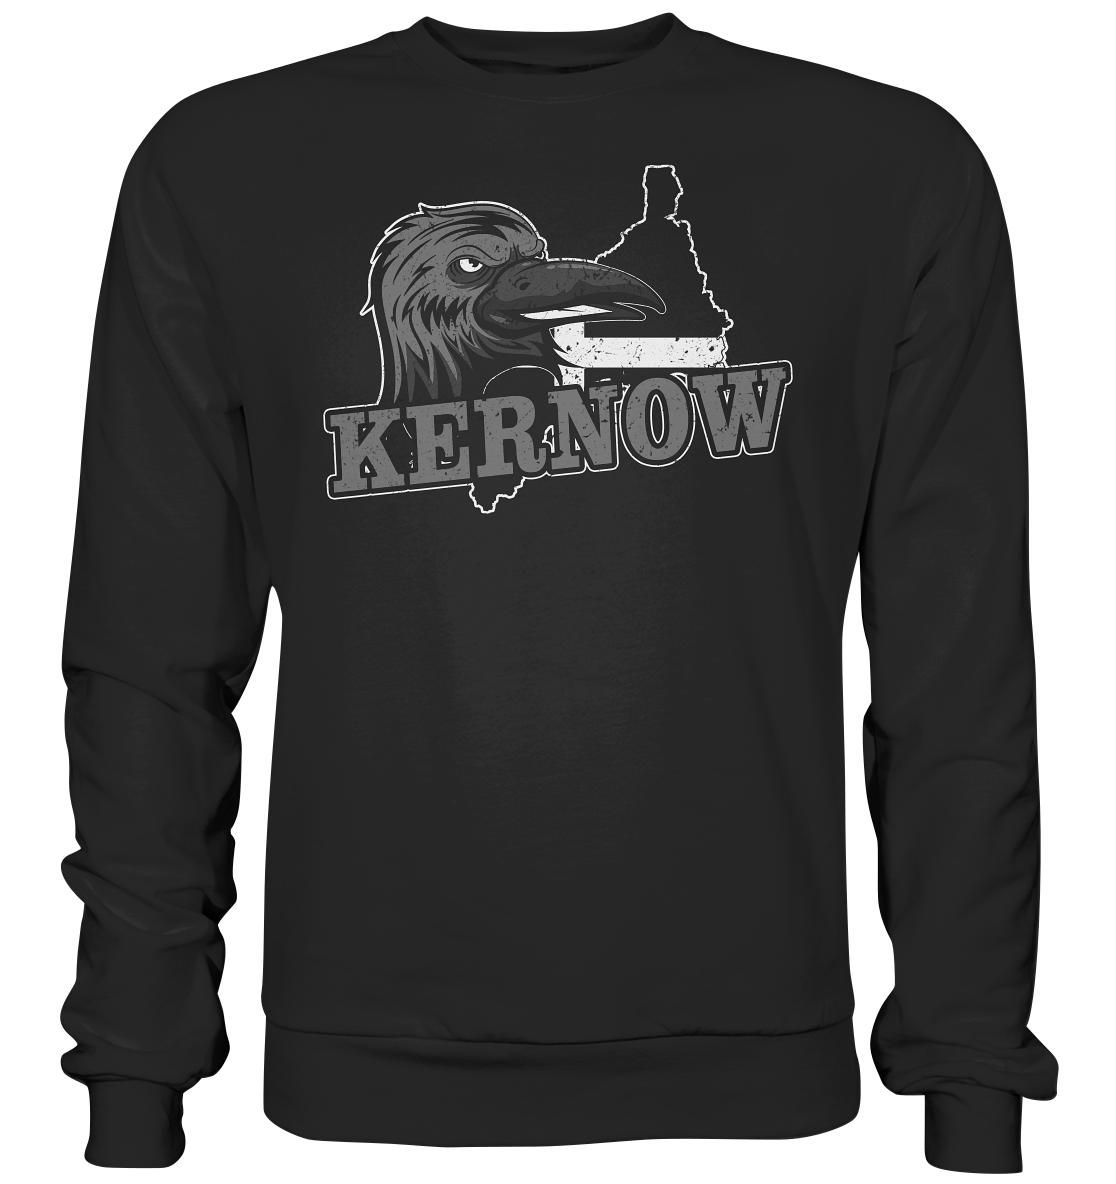 Celtic Nation "Cornwall / Kernow" - Premium Sweatshirt